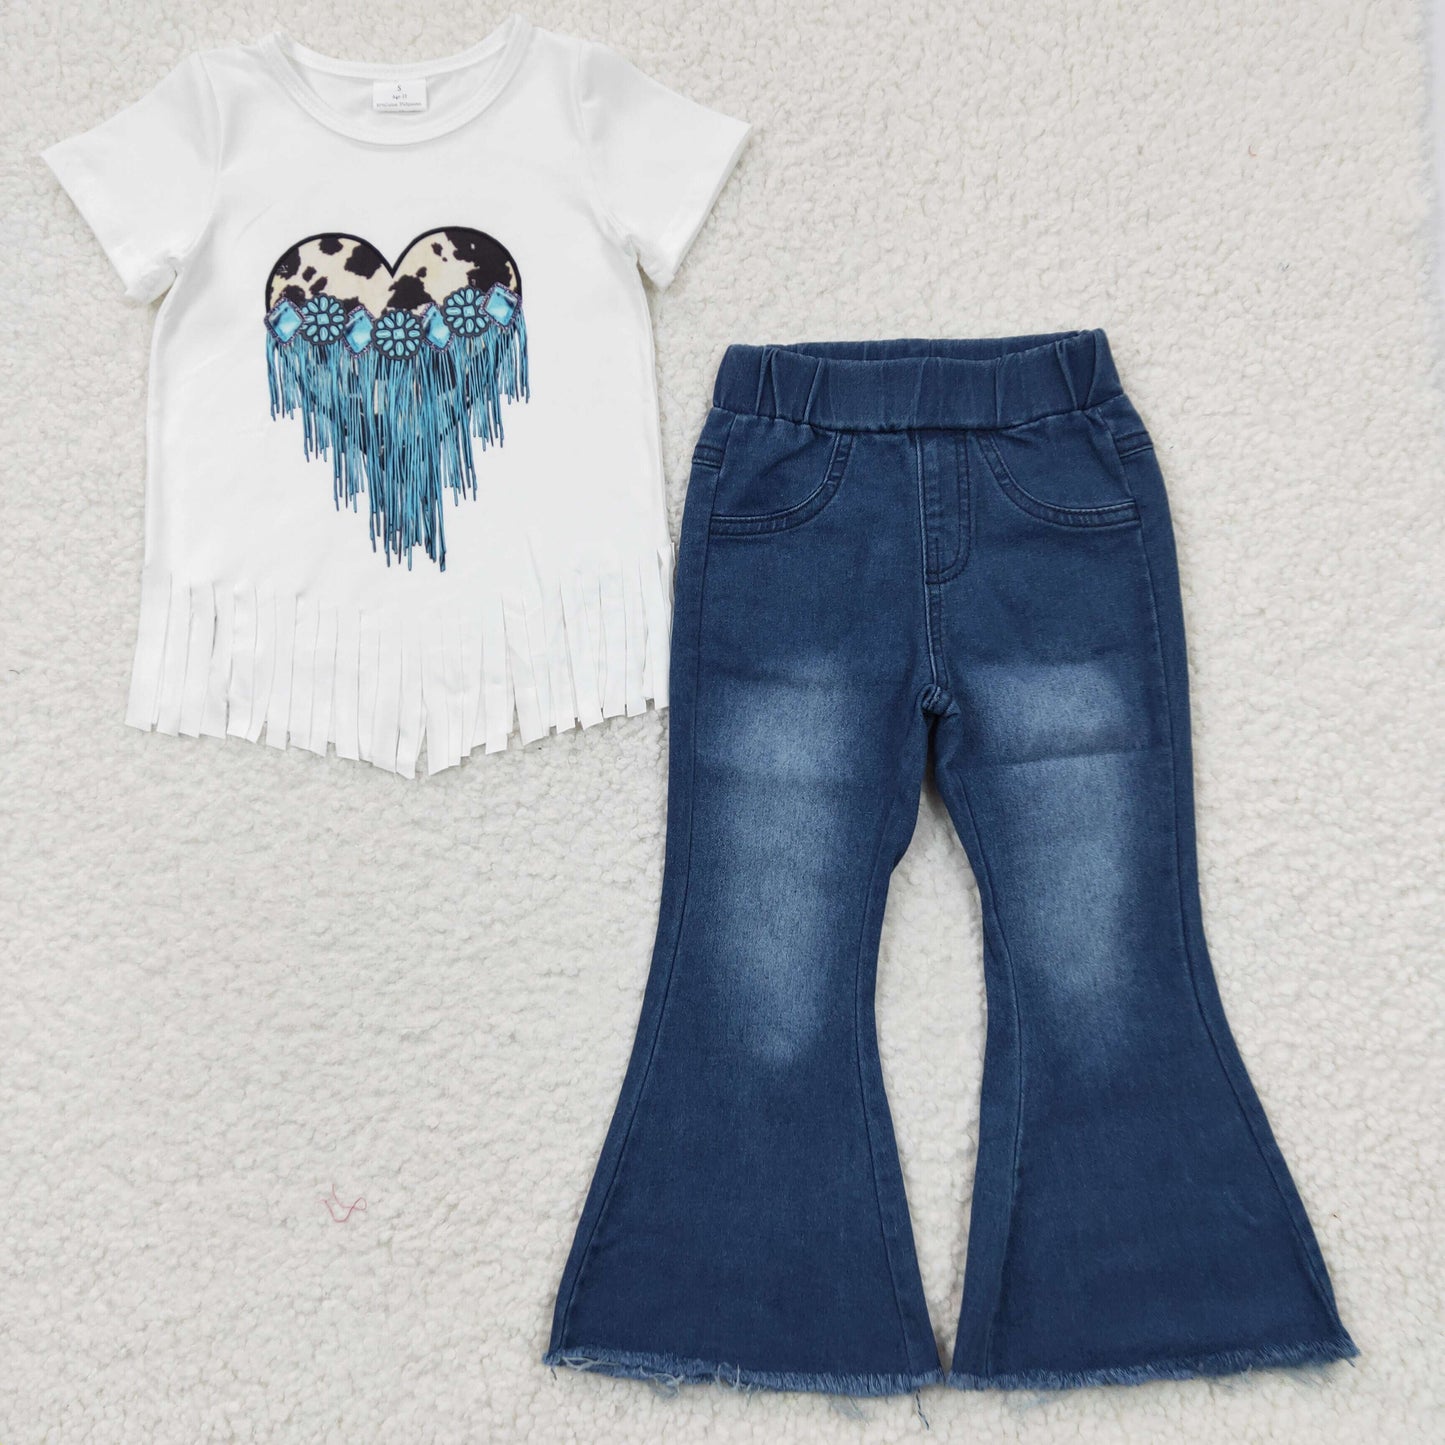 Toddle girls short sleeve turquoise print top 2pcs denim pants set